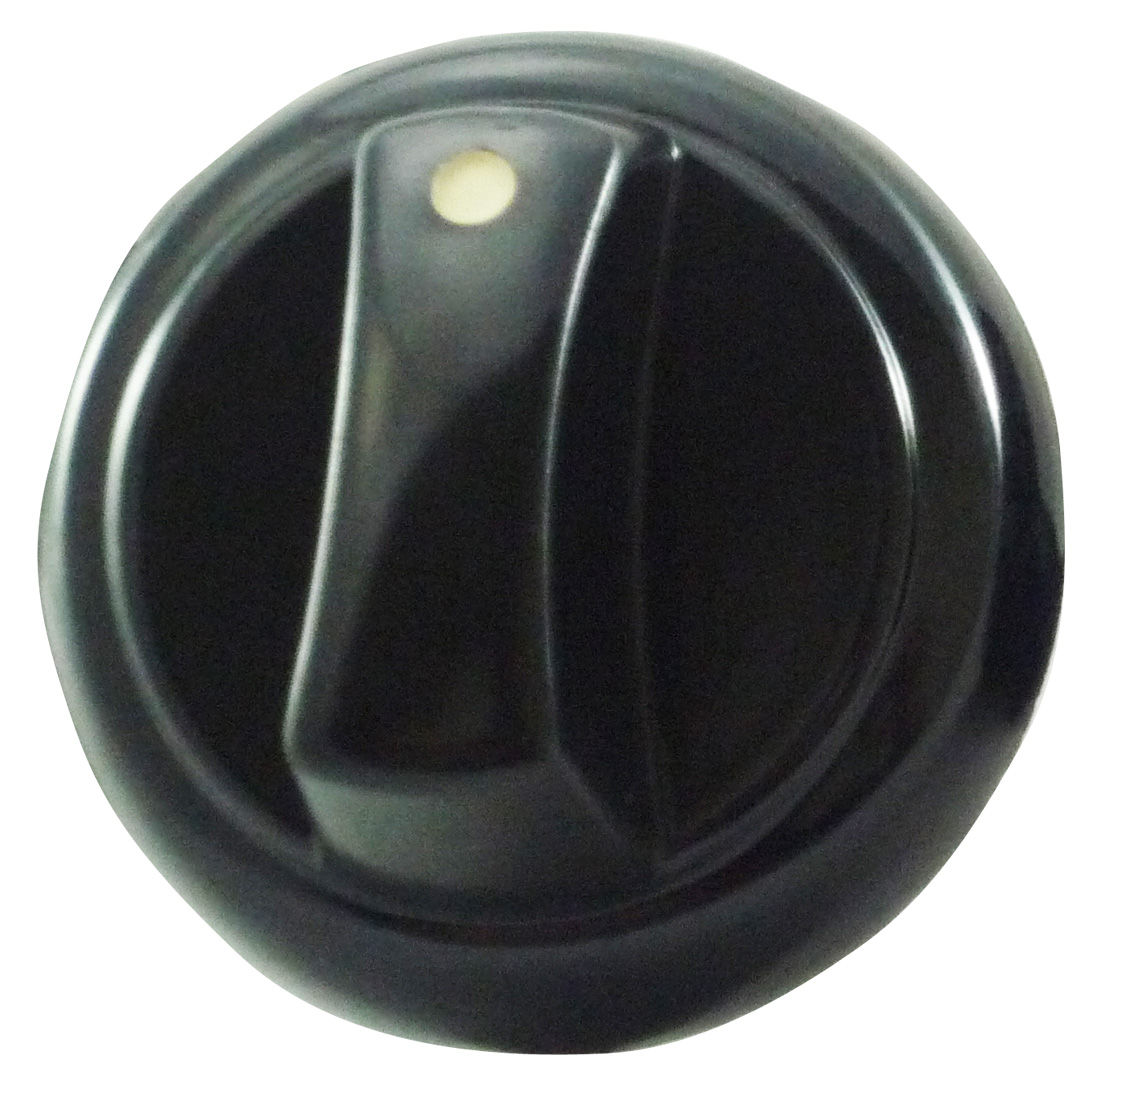 Gas stove knob (Outside diameter 52mm)